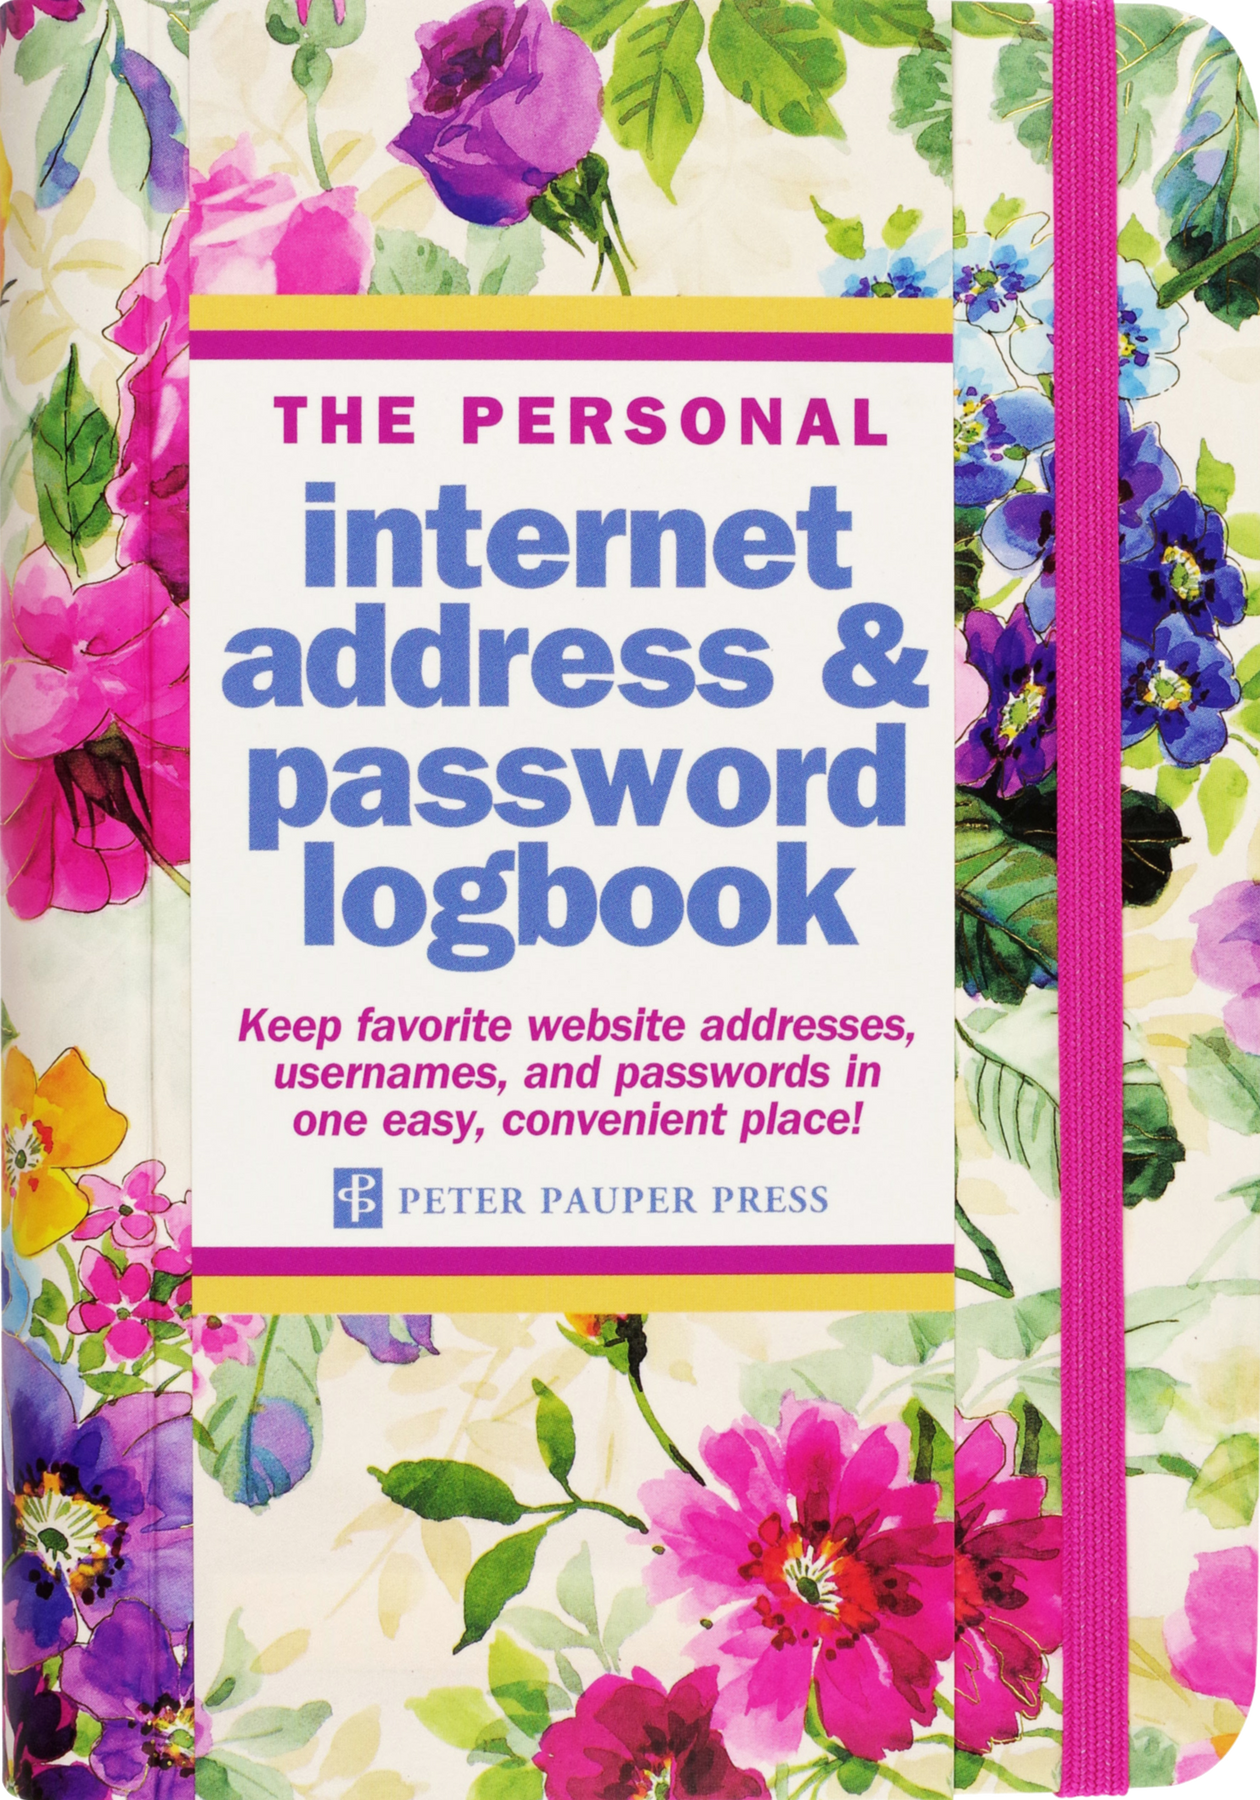 Internet Log Book - Peony Garden